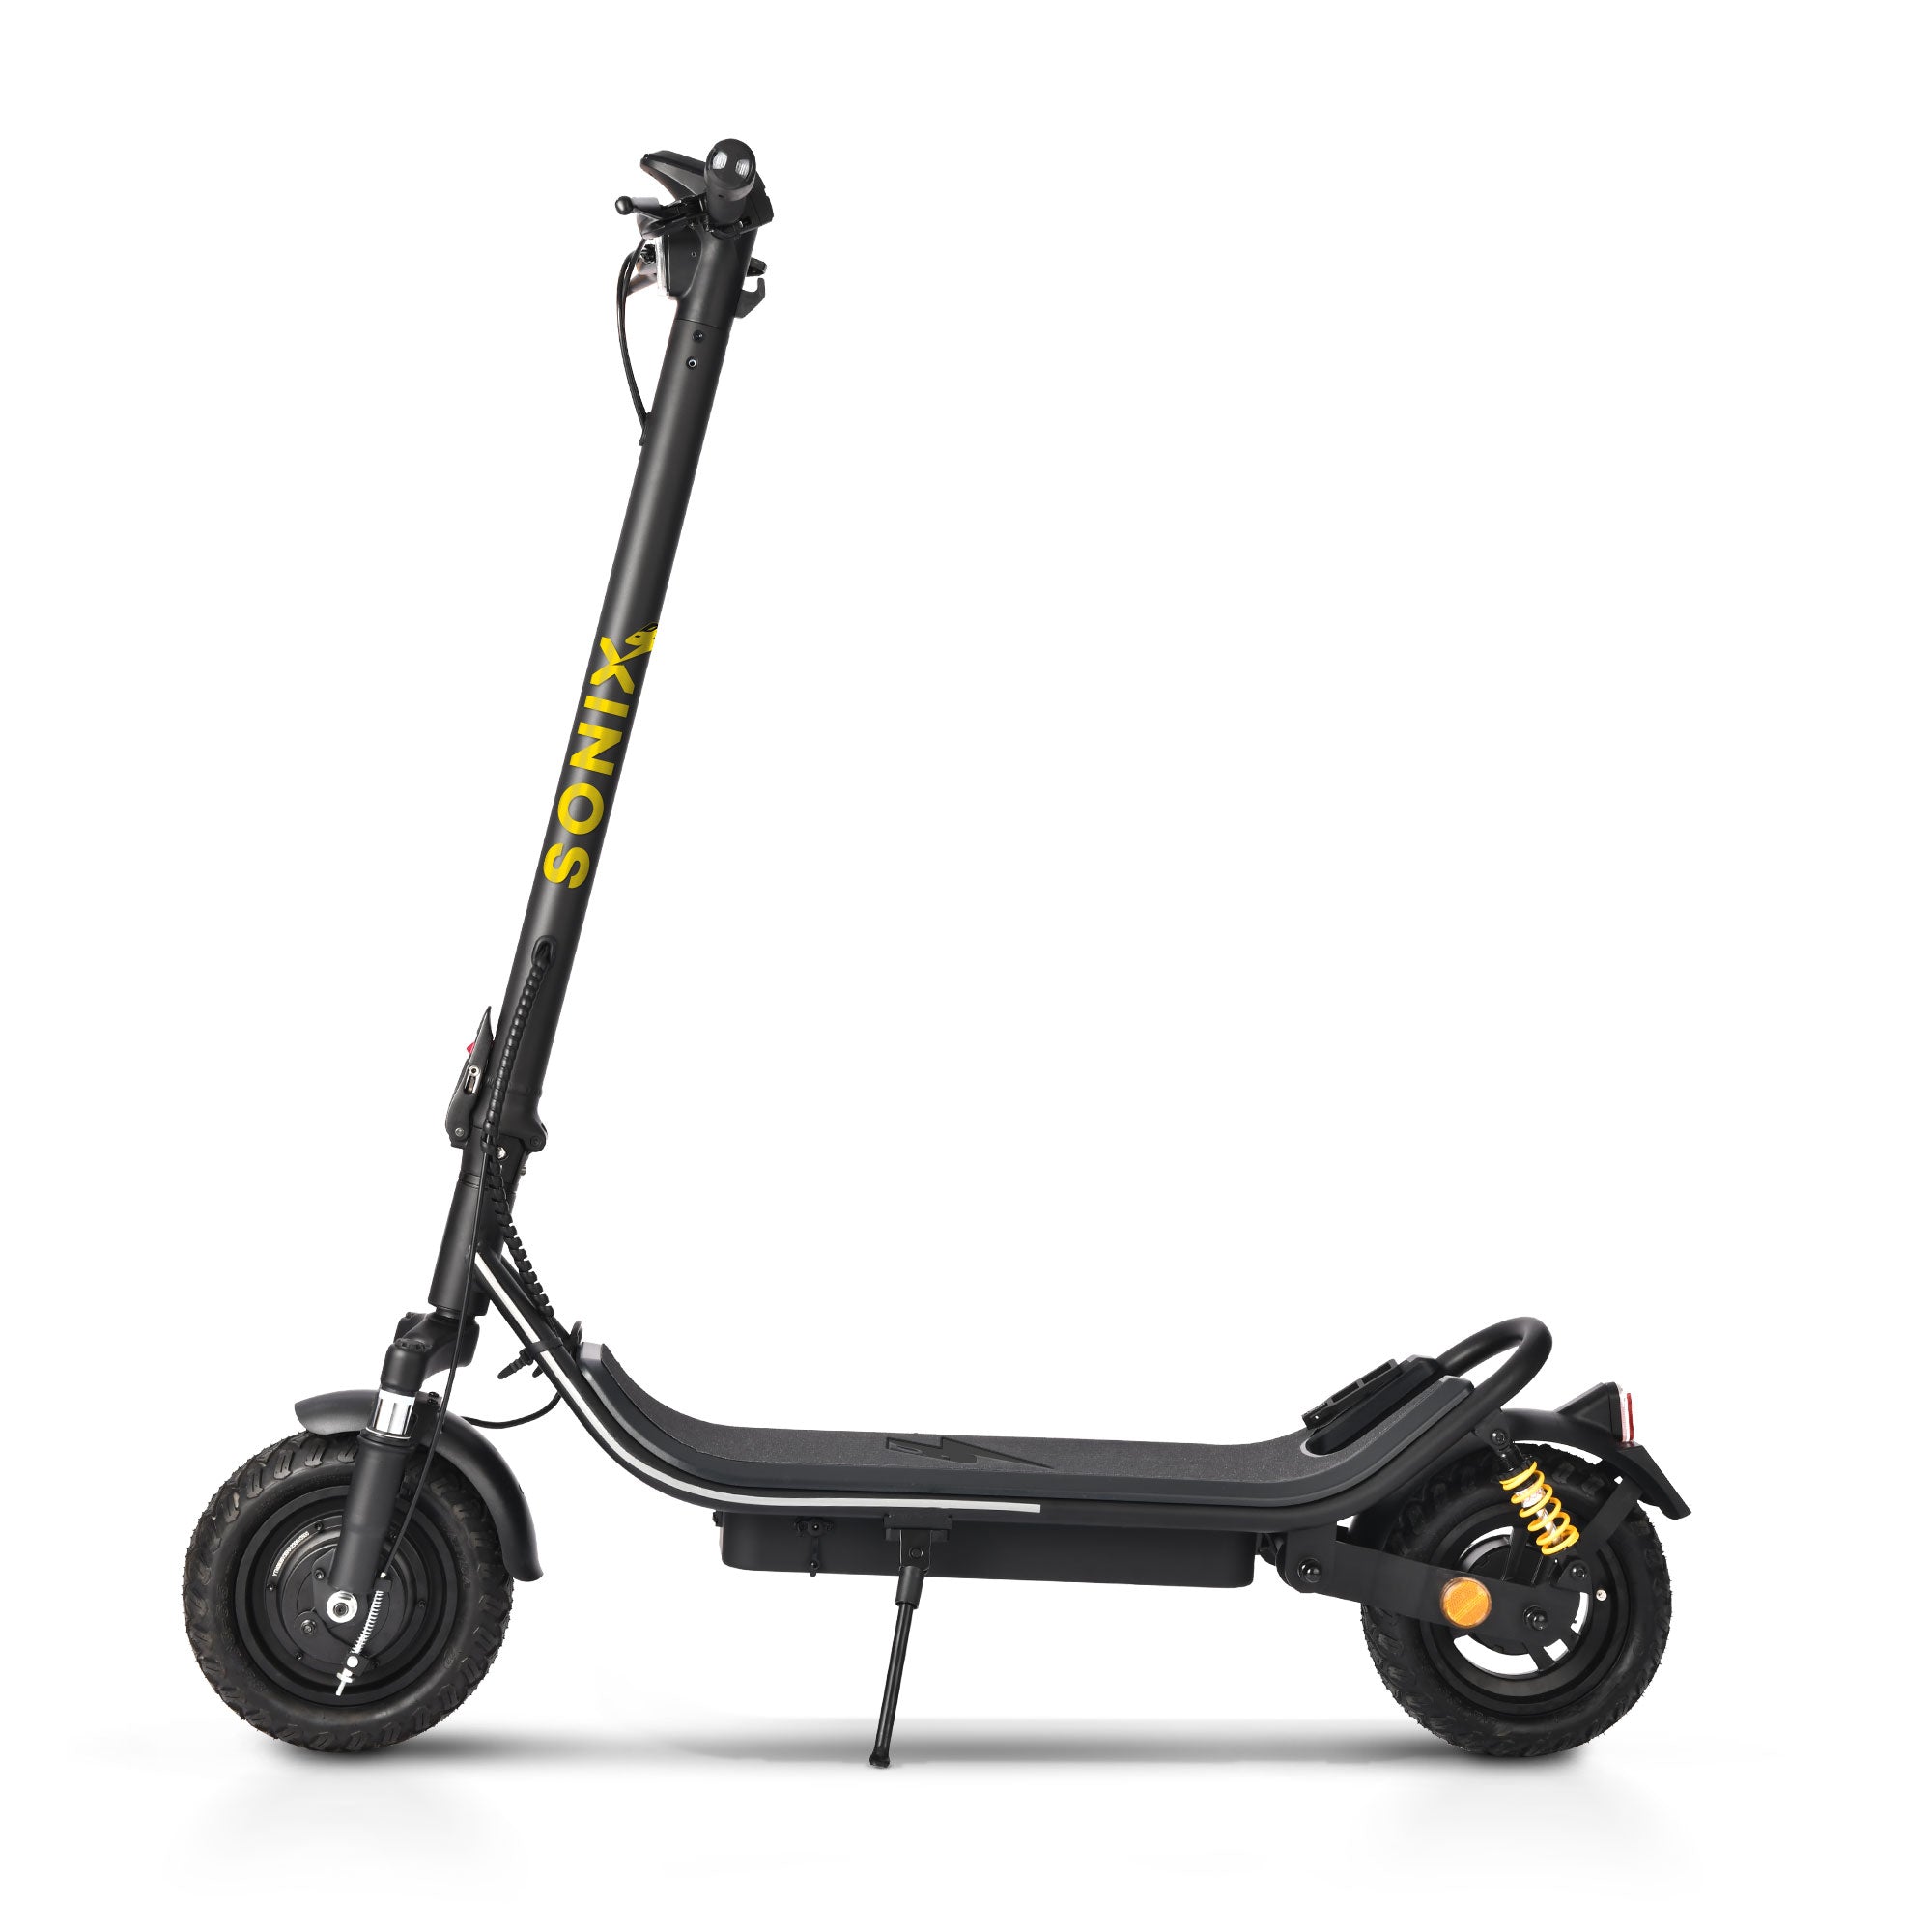 Sonix Trailblazer - Portable All Terrains Electric Scooter